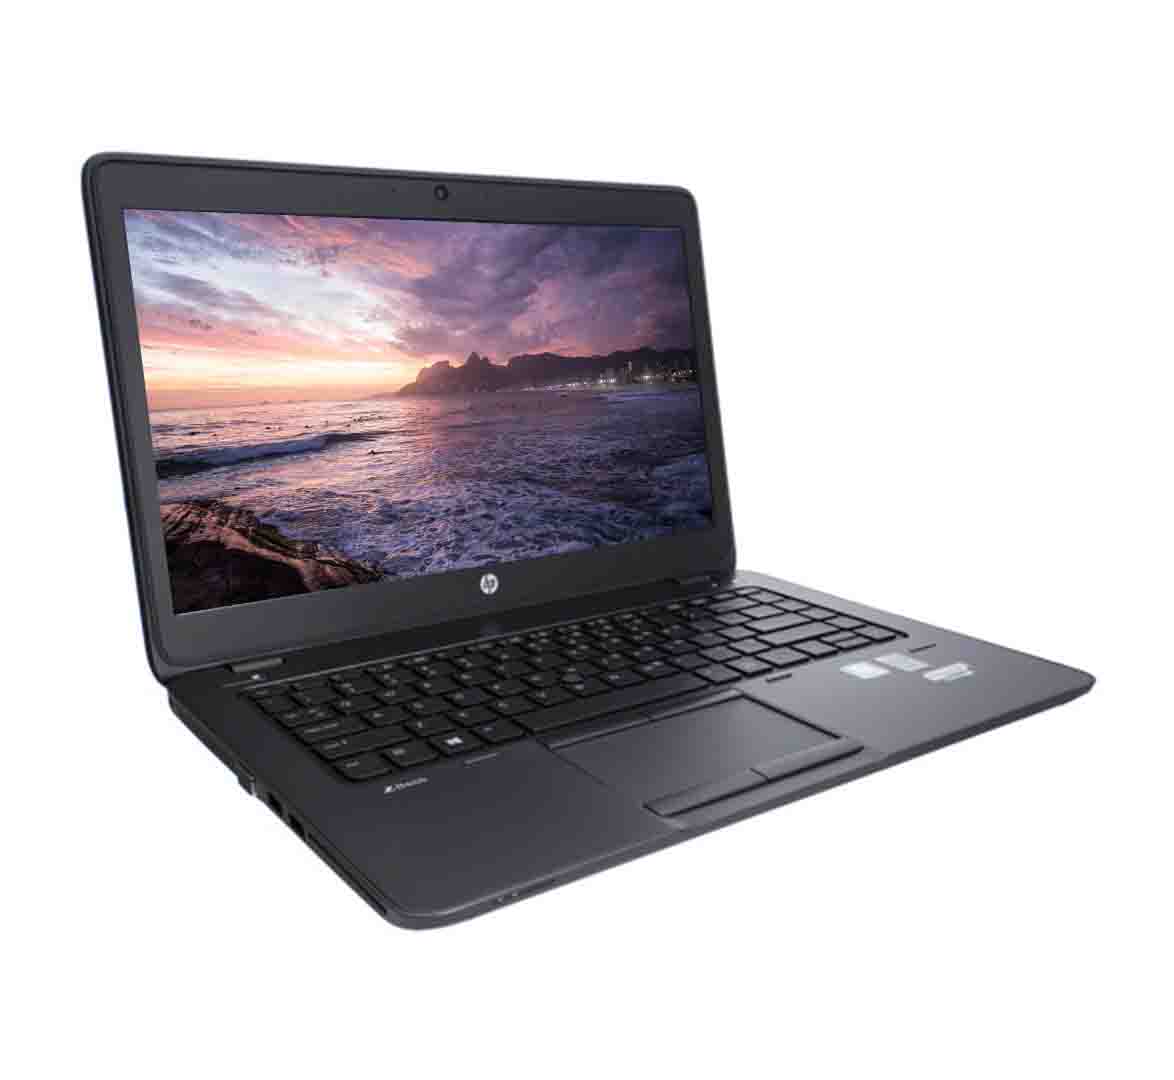 HP Zbook 14 G1, Intel Core i7-4th Gen. CPU, 8GB RAM, 256GB SSD, AMD FirePro M4100, 14.1 inch Display, Windows 10 PRO, Refurbished Laptop